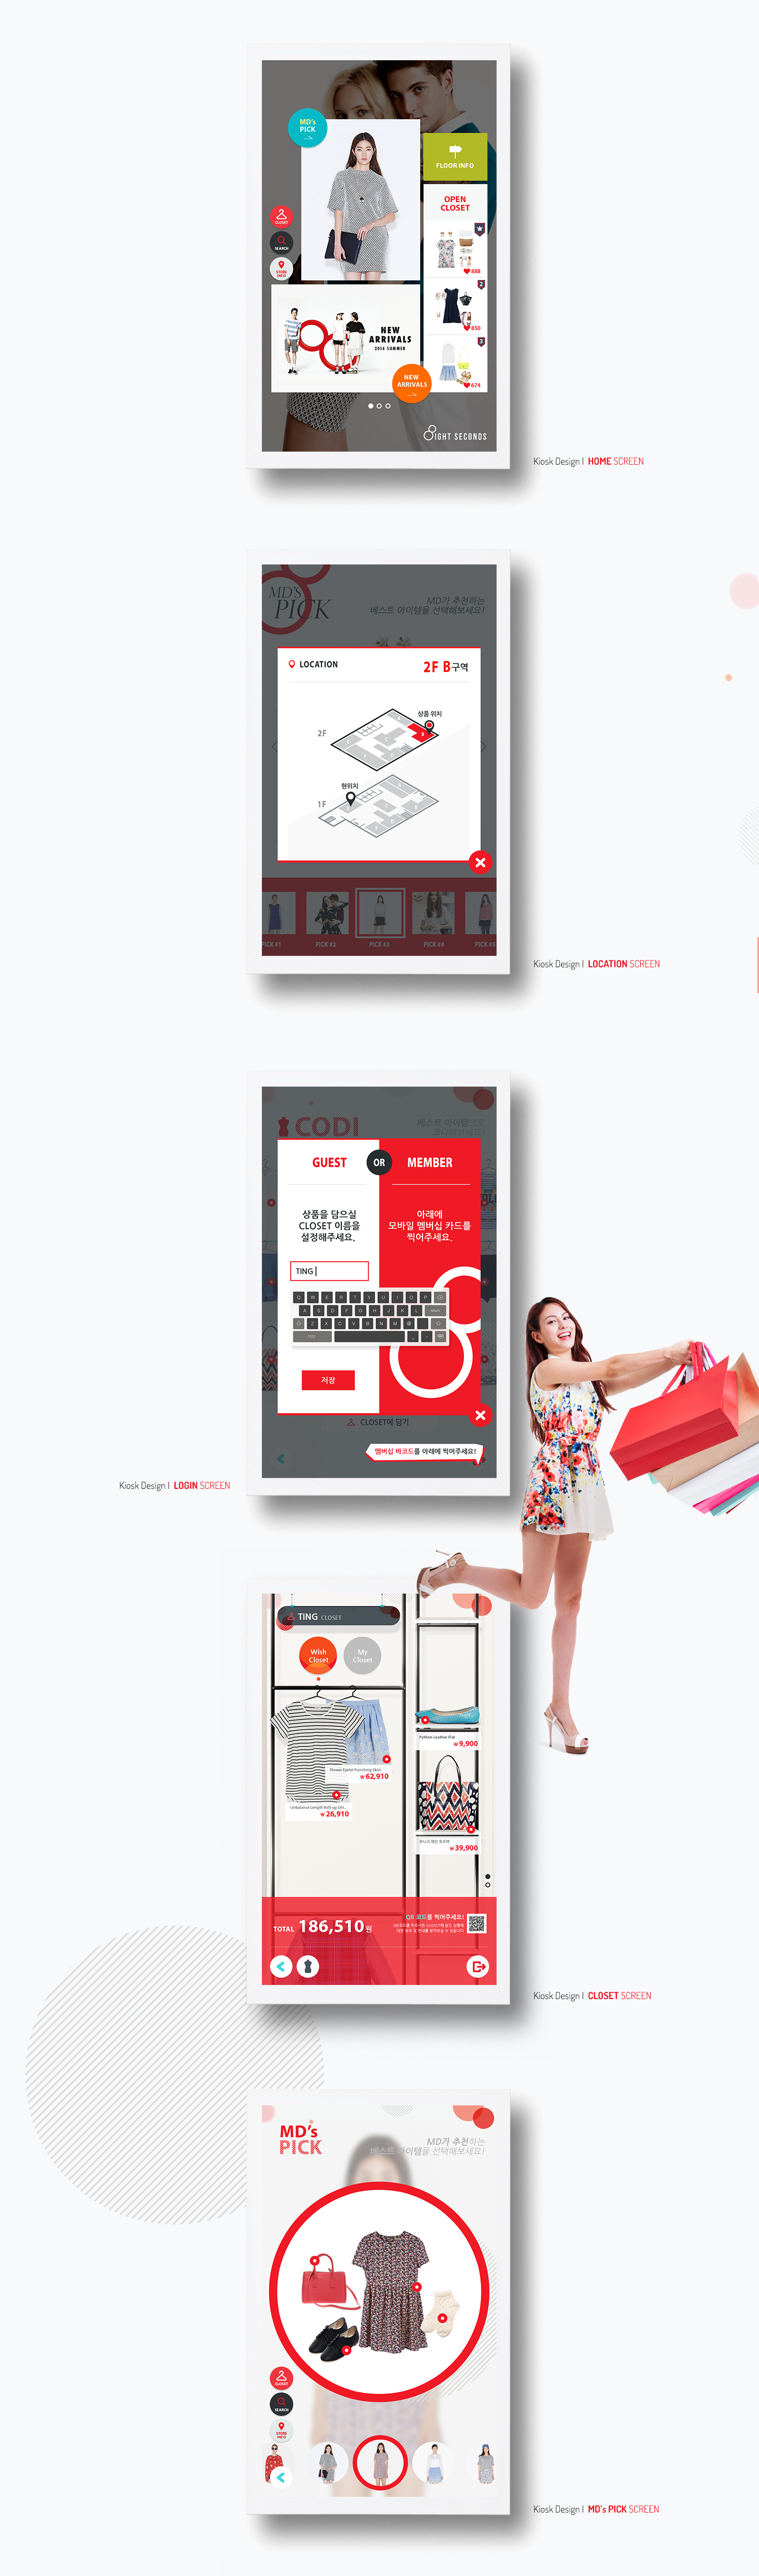 ux UI GUI design 8SECONDS shoping Kiosk mobile Web kangseunghyun designerkang